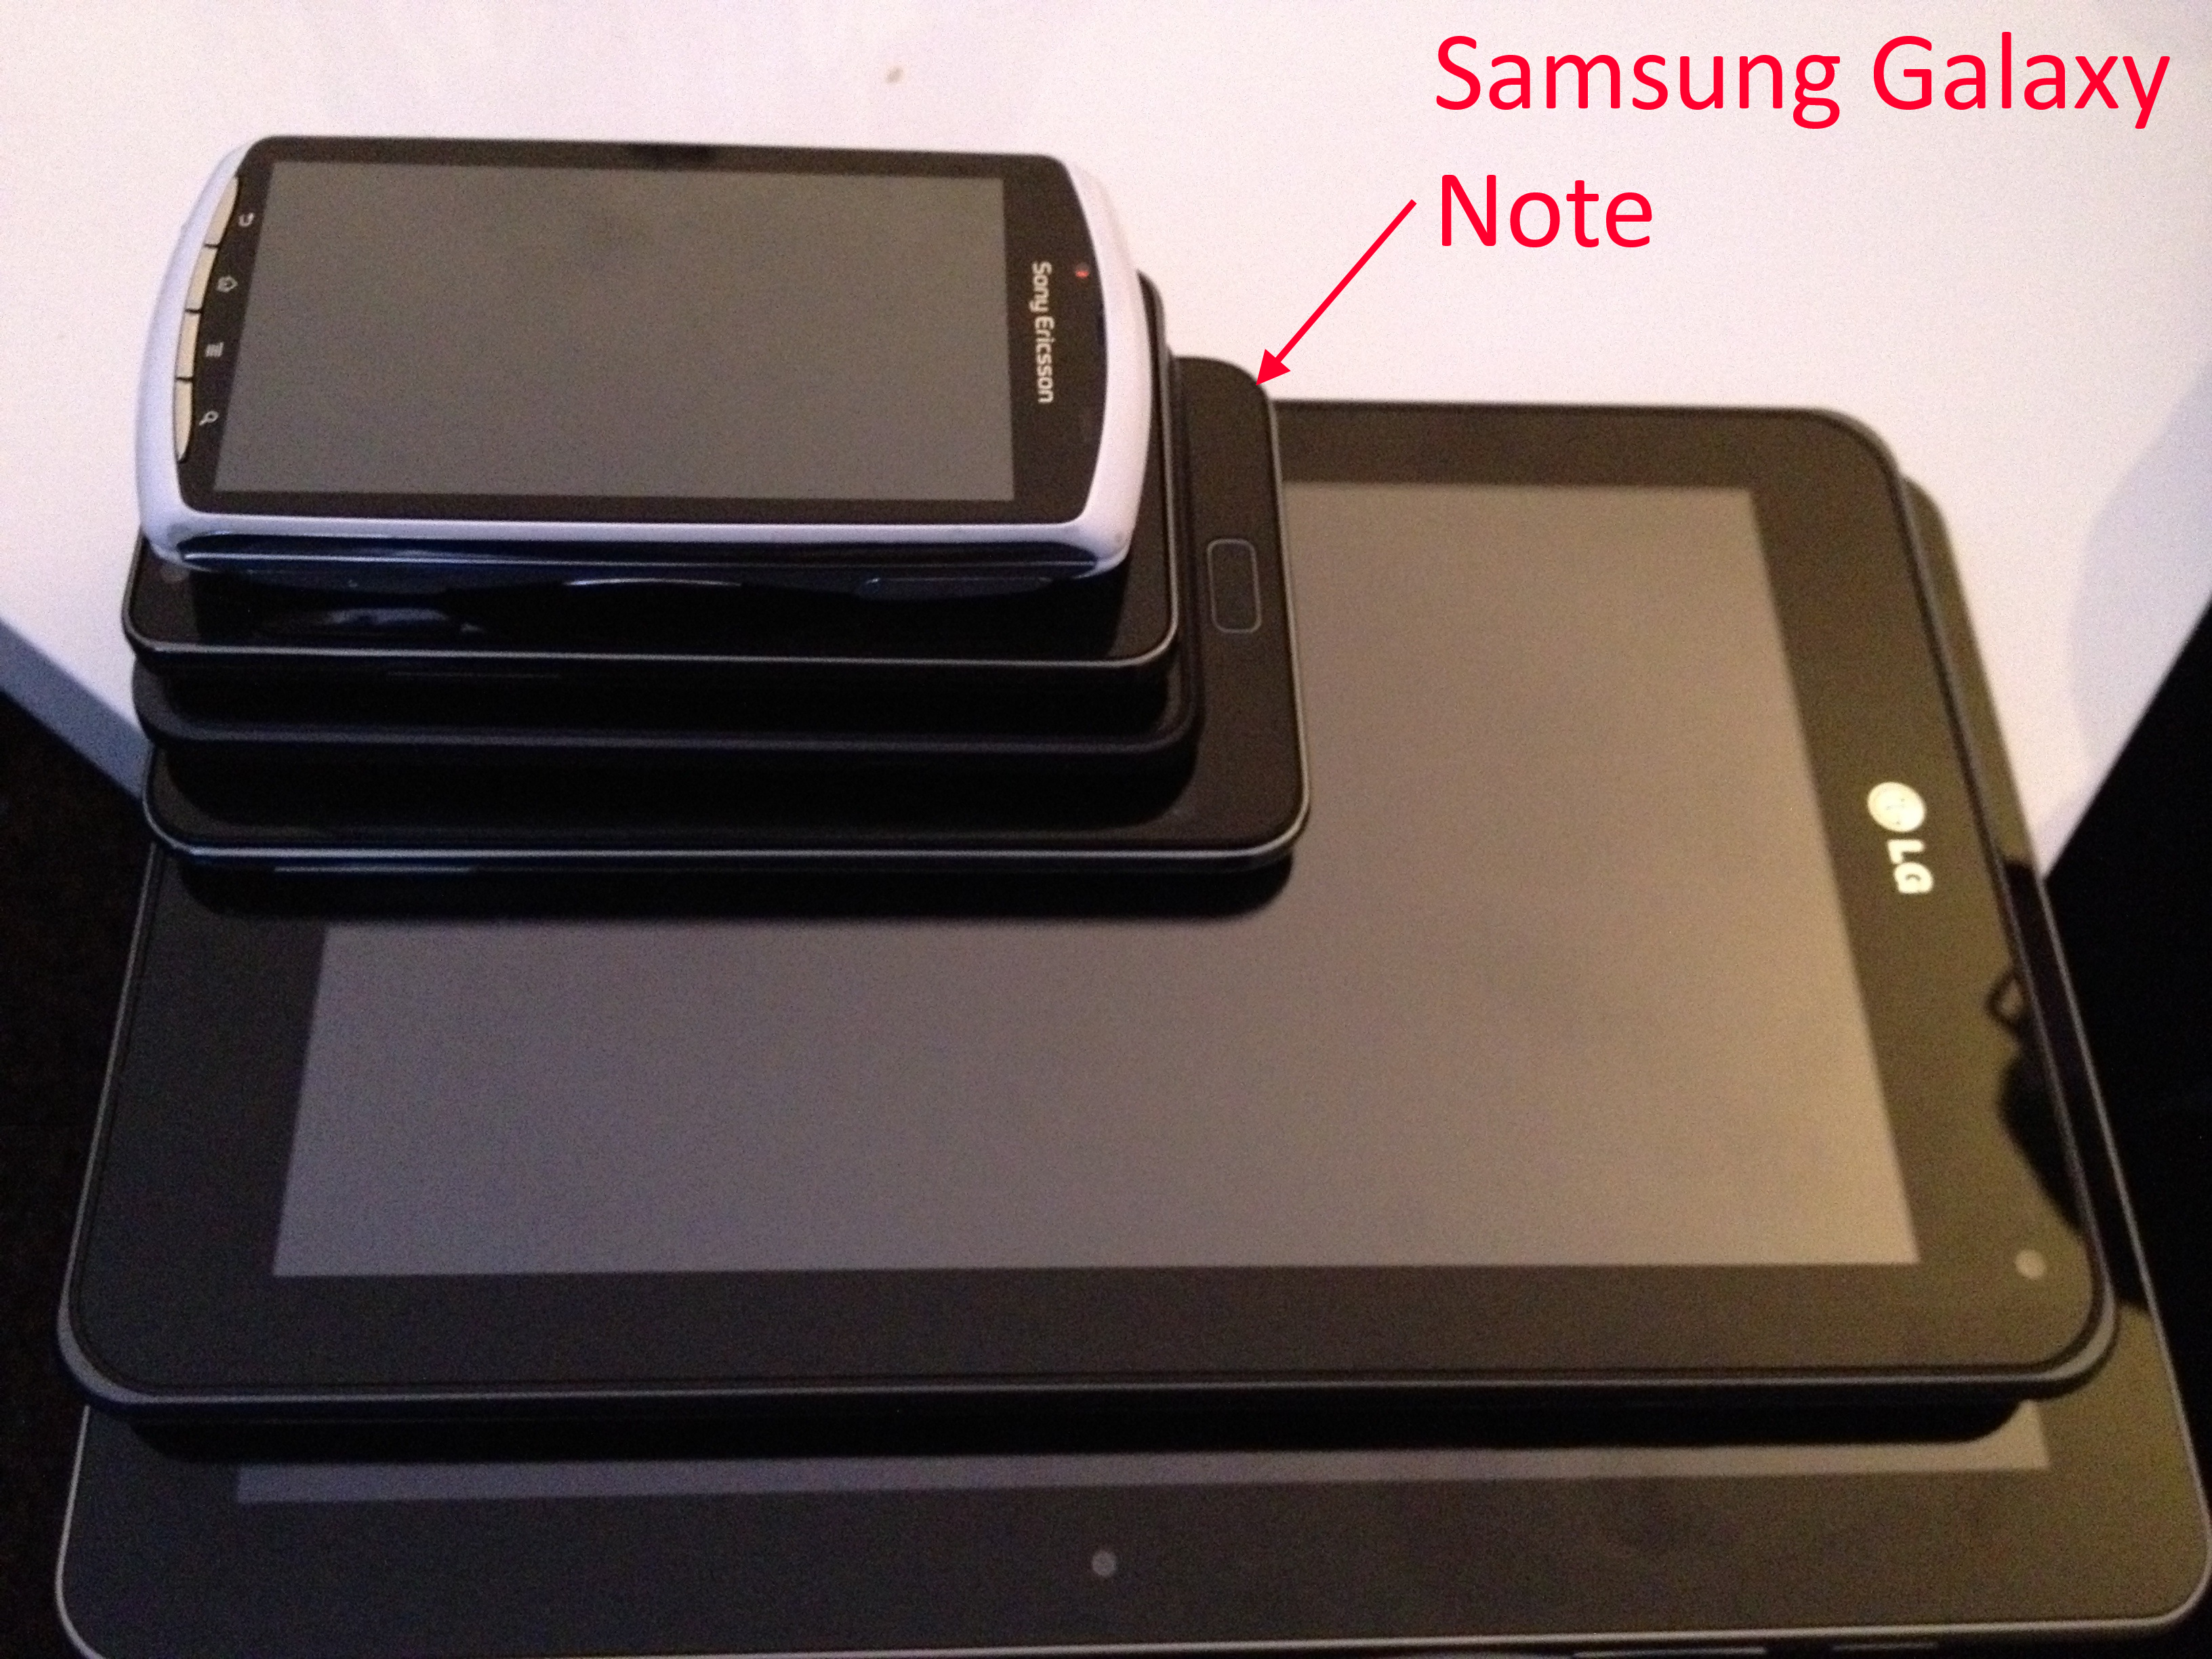 Samsung Galaxy Note (original) - Wikipedia